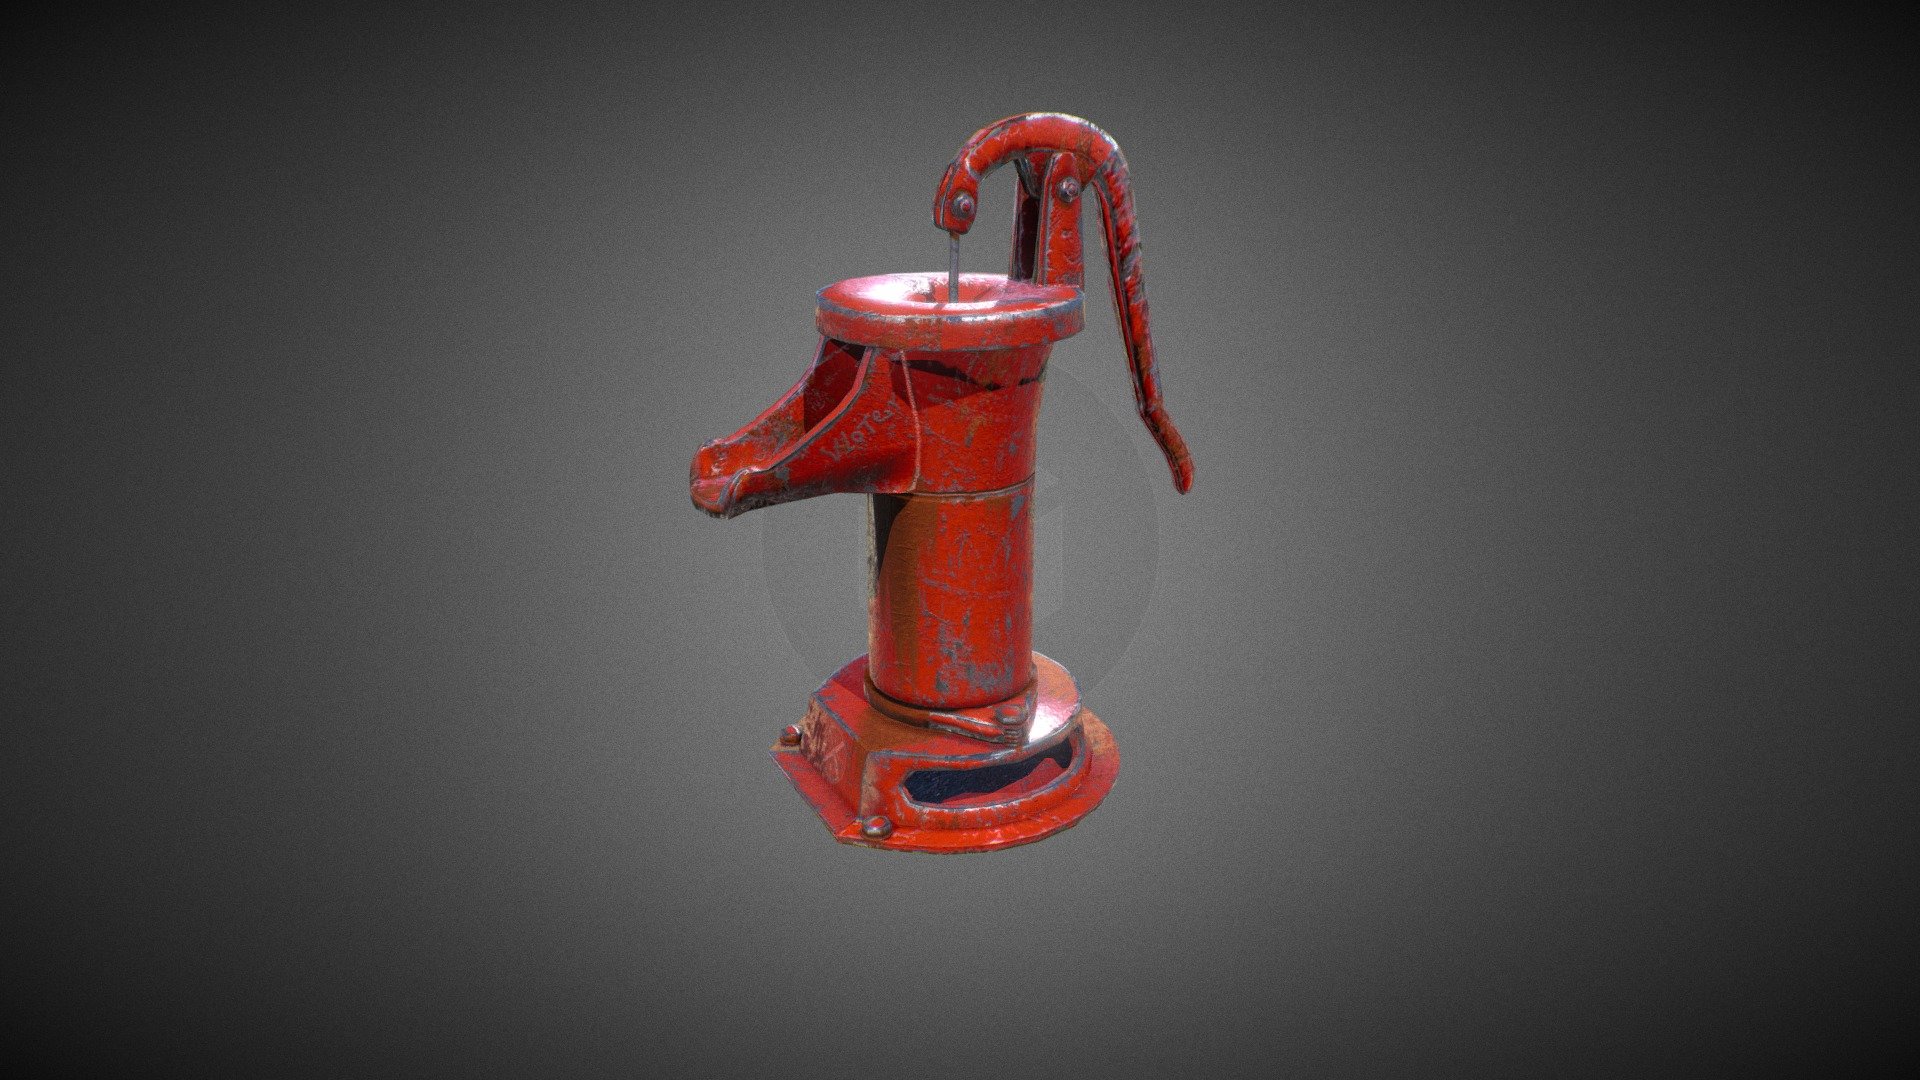 Old Water Pump